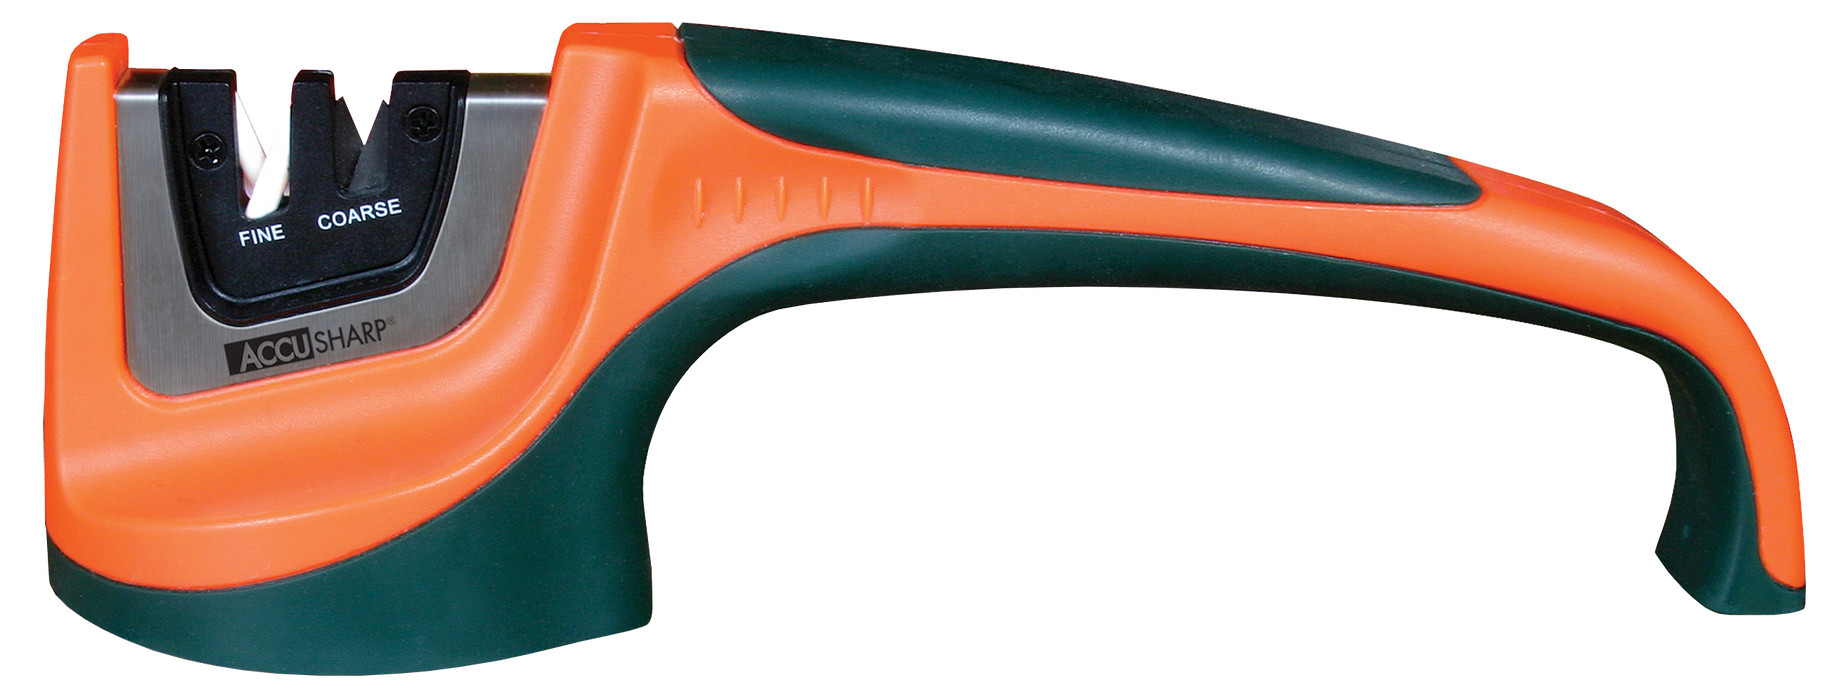 Accusharp Pull-through Sharpener Hand Held Fine | Coarse Tungsten Carbide And Ceramic Sharpener Rubber Handle Black/orange